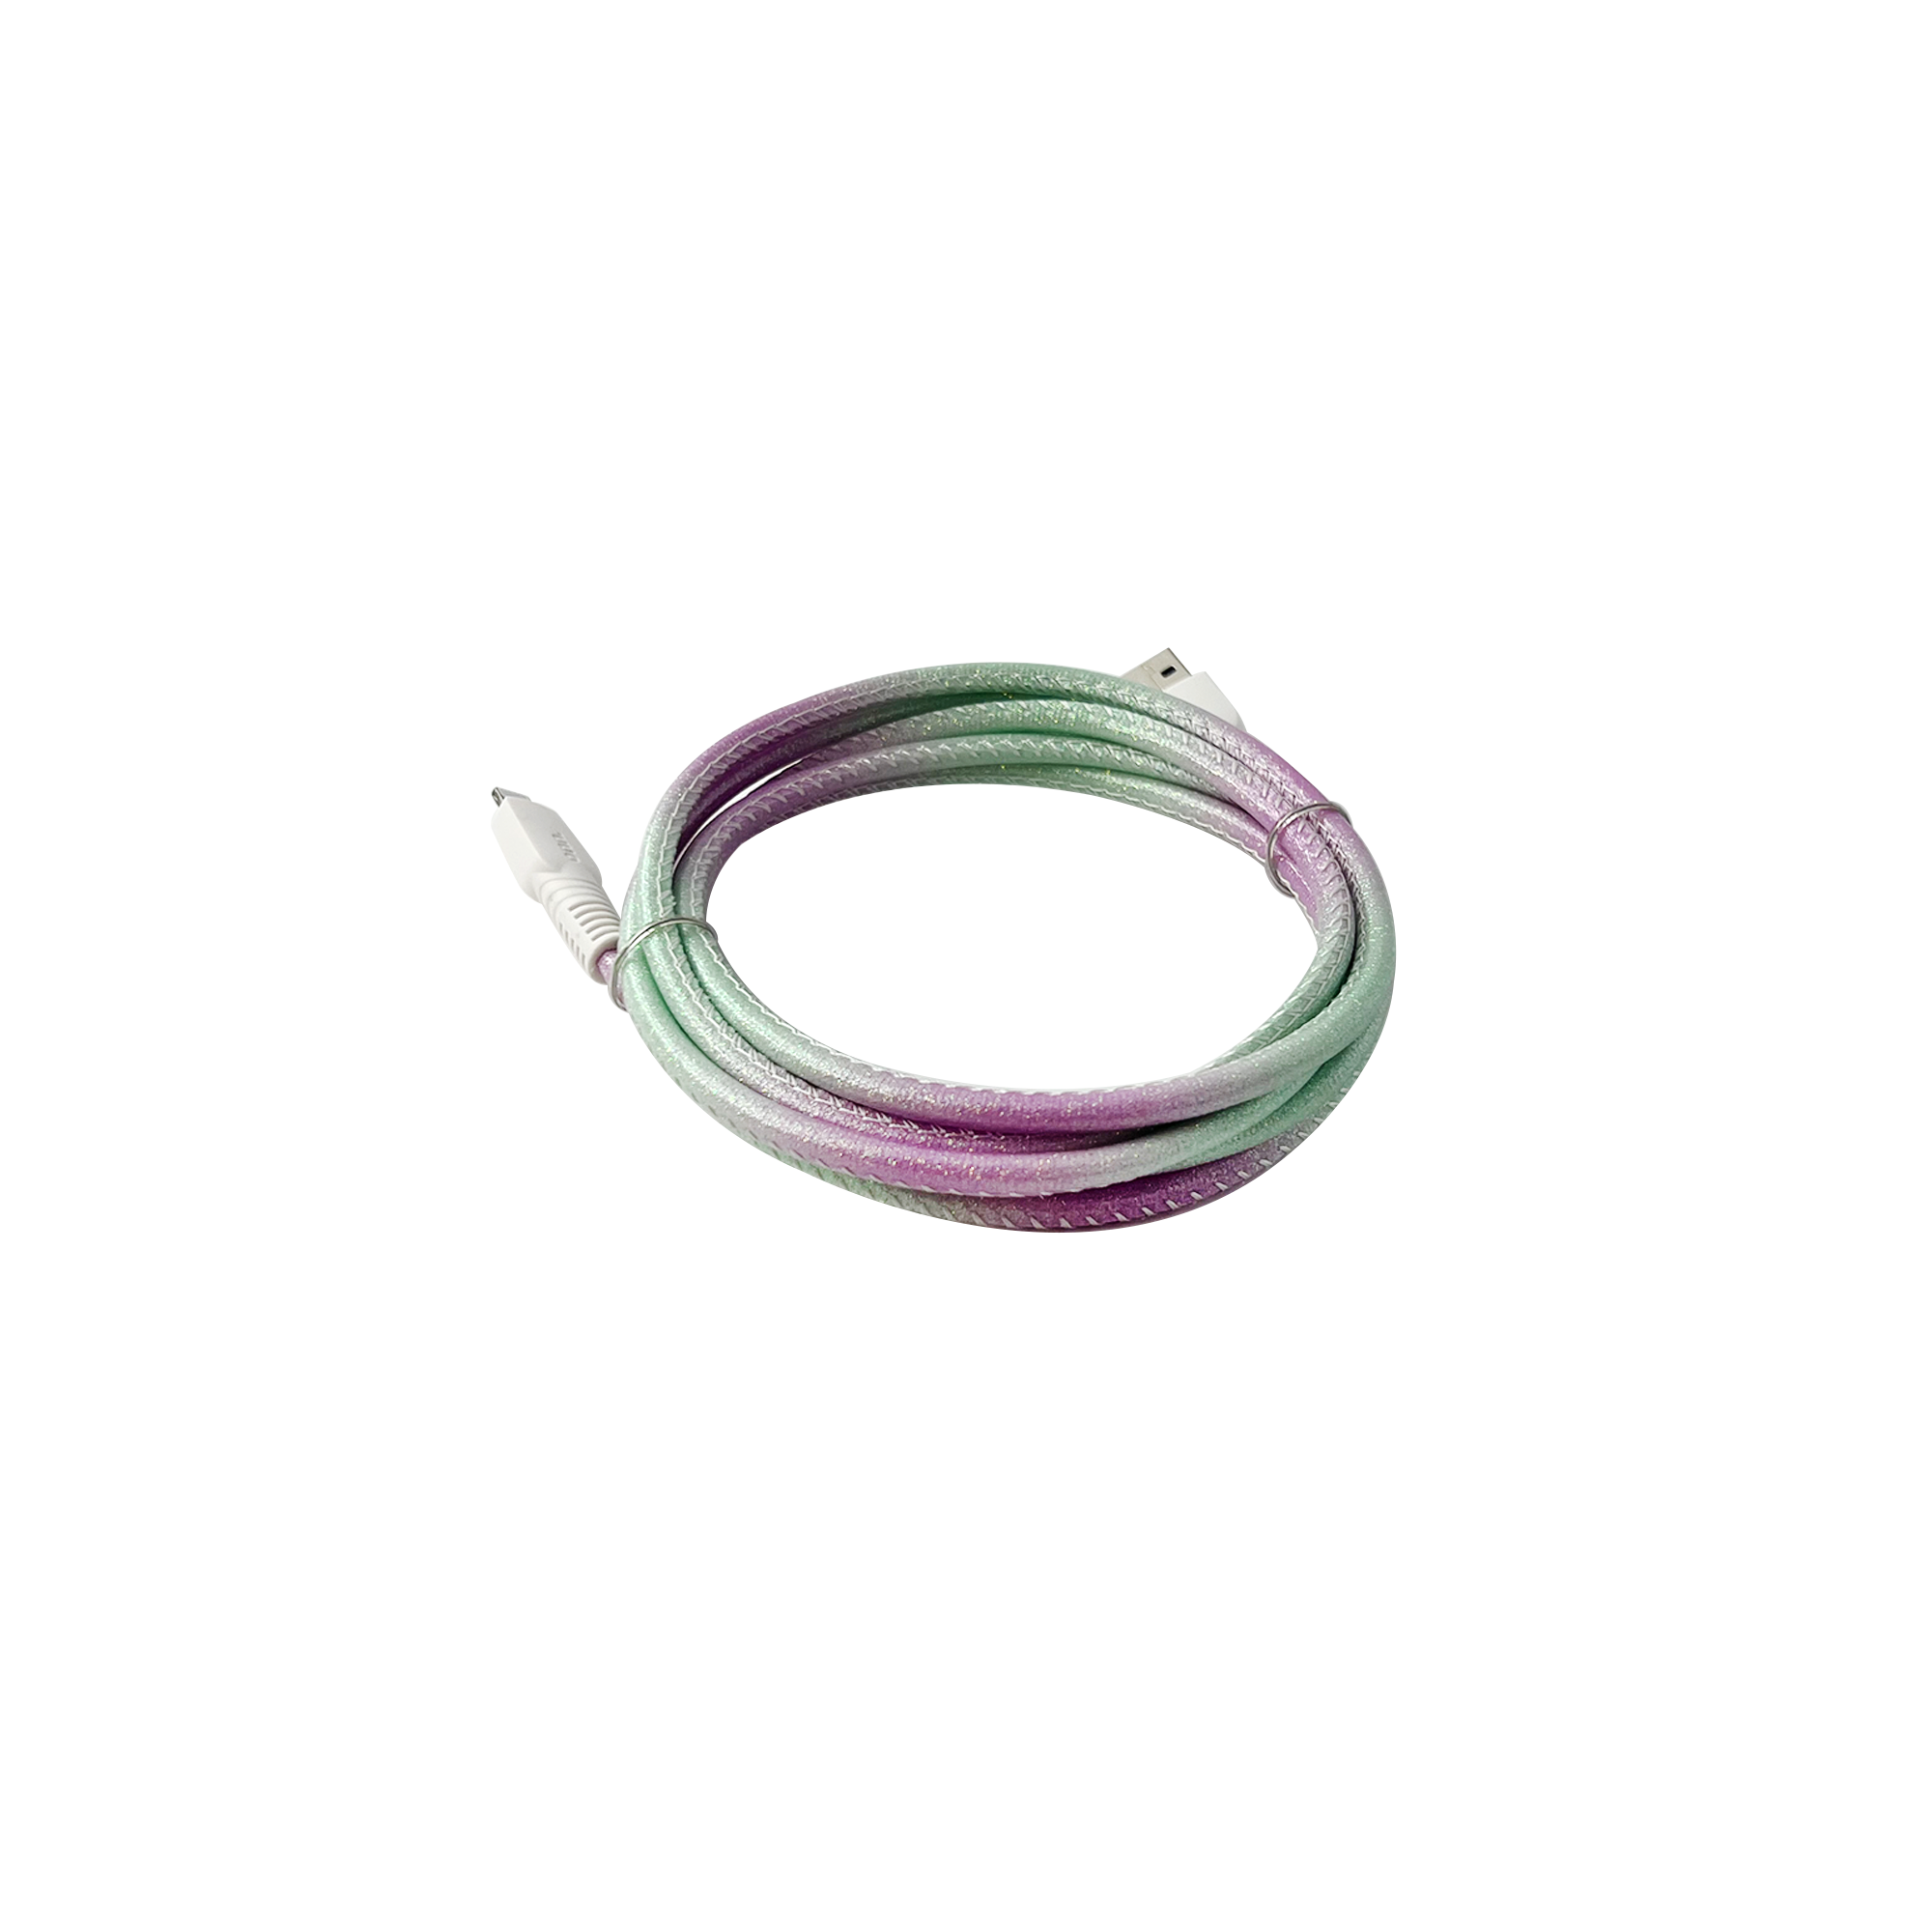 onn. Lightning to USB Glitter Cable, 6' Cord, Purple & Mint